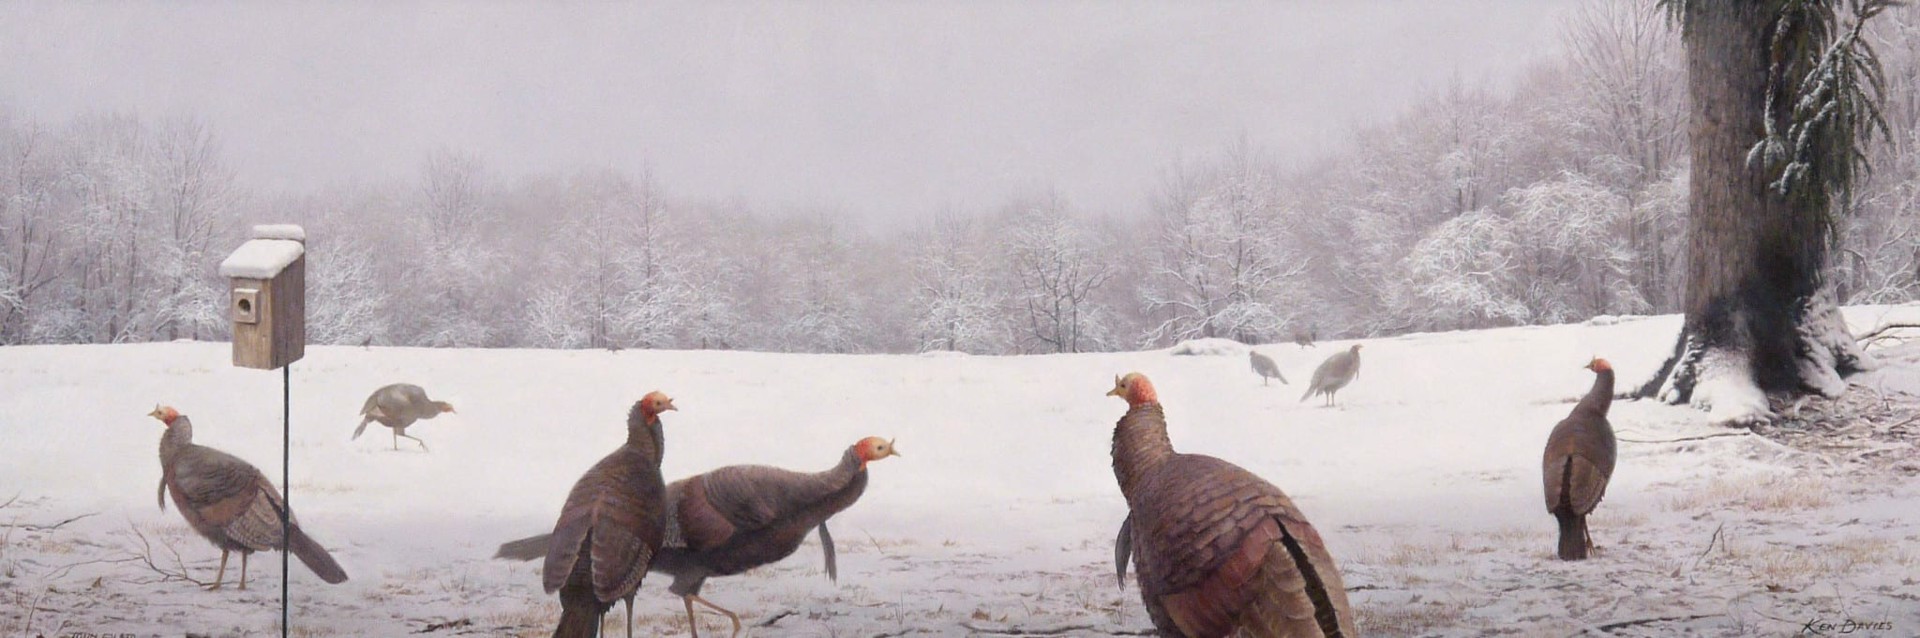 Wild Turkeys on Walnut Hill by John Falato